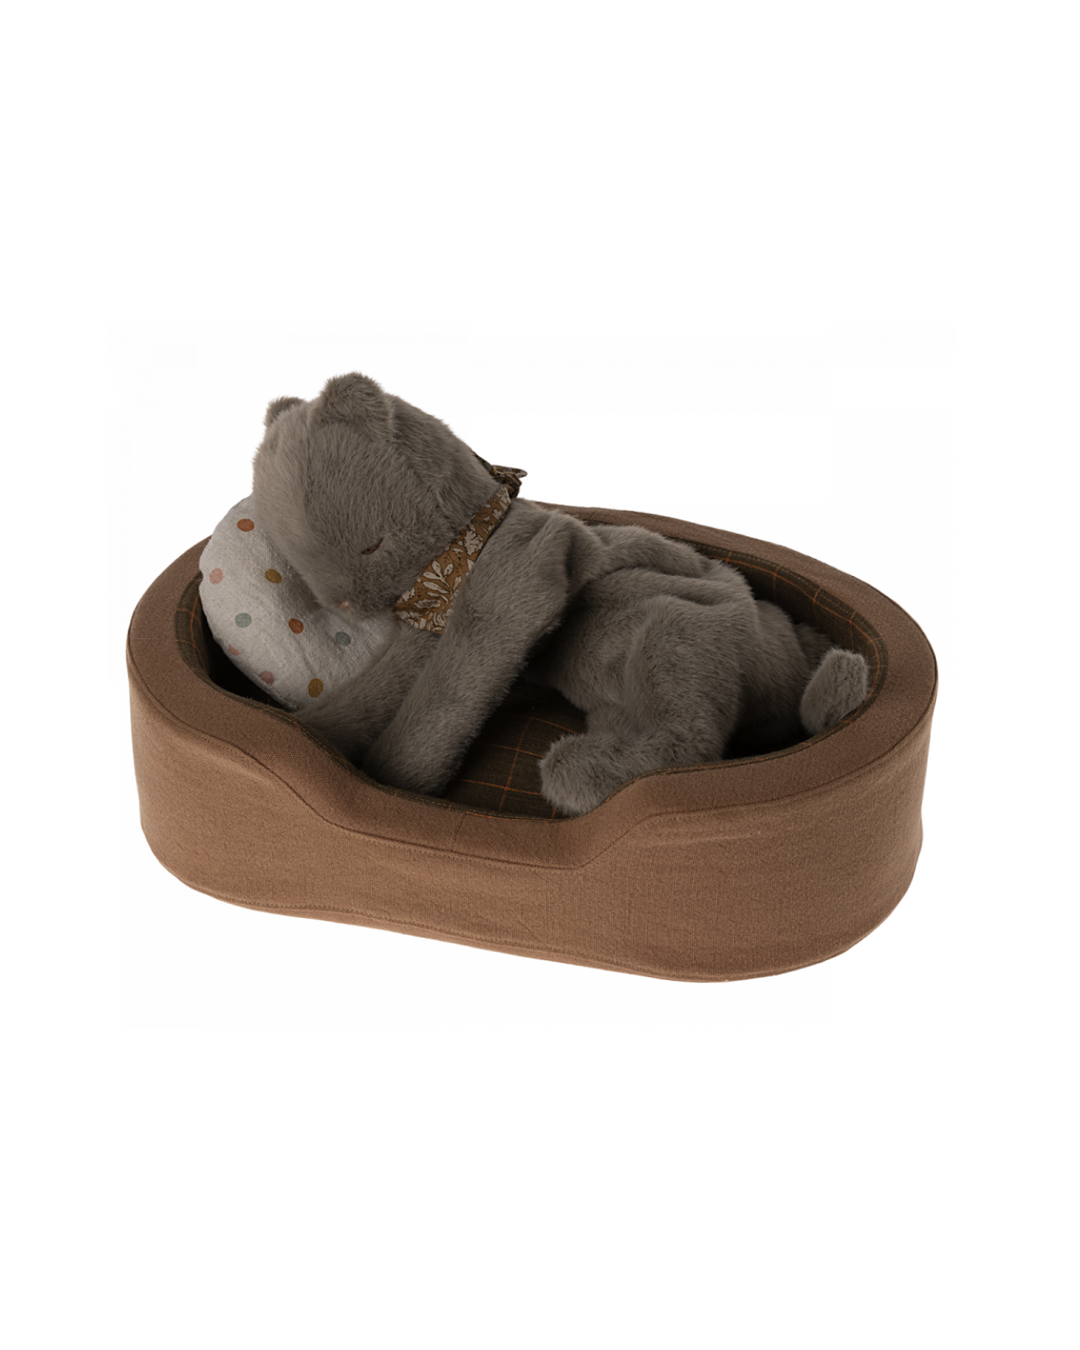 Maileg Kitten Plush - Earth Grey: Cute Toy